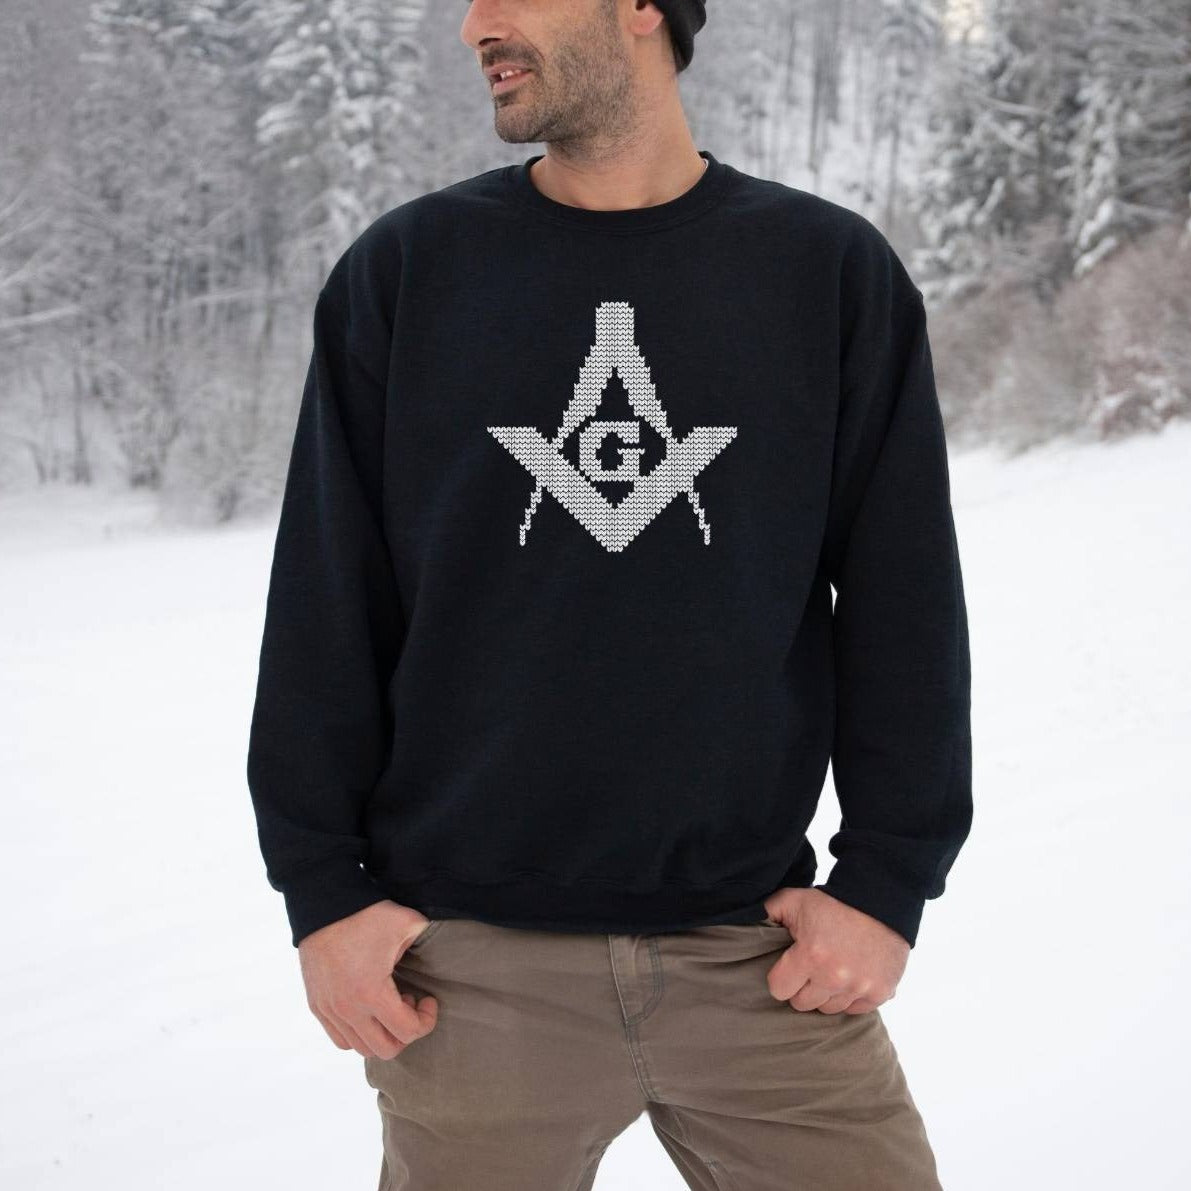 Master Mason Blue Lodge Sweatshirt - Black Christmas Ugly Square and Compass G - Bricks Masons